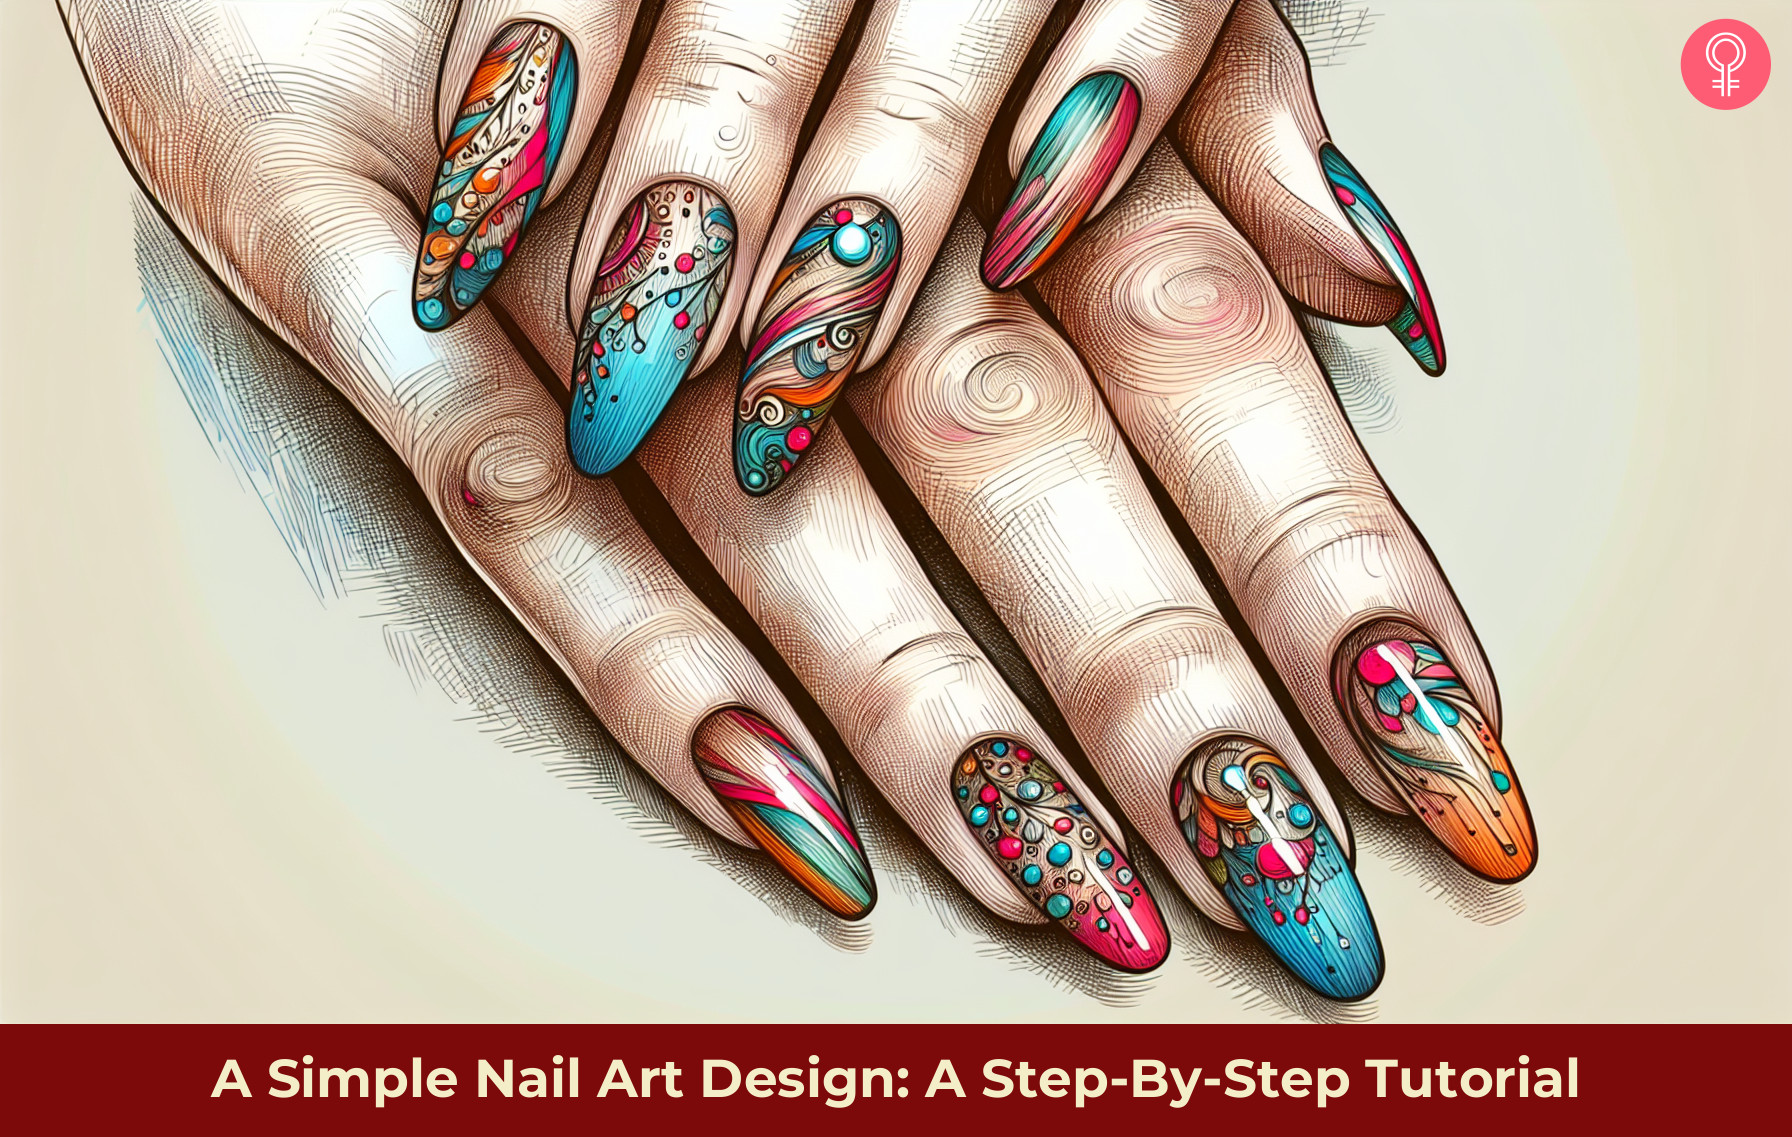 A Simple Nail Art Design - A Step-By-Step Tutorial